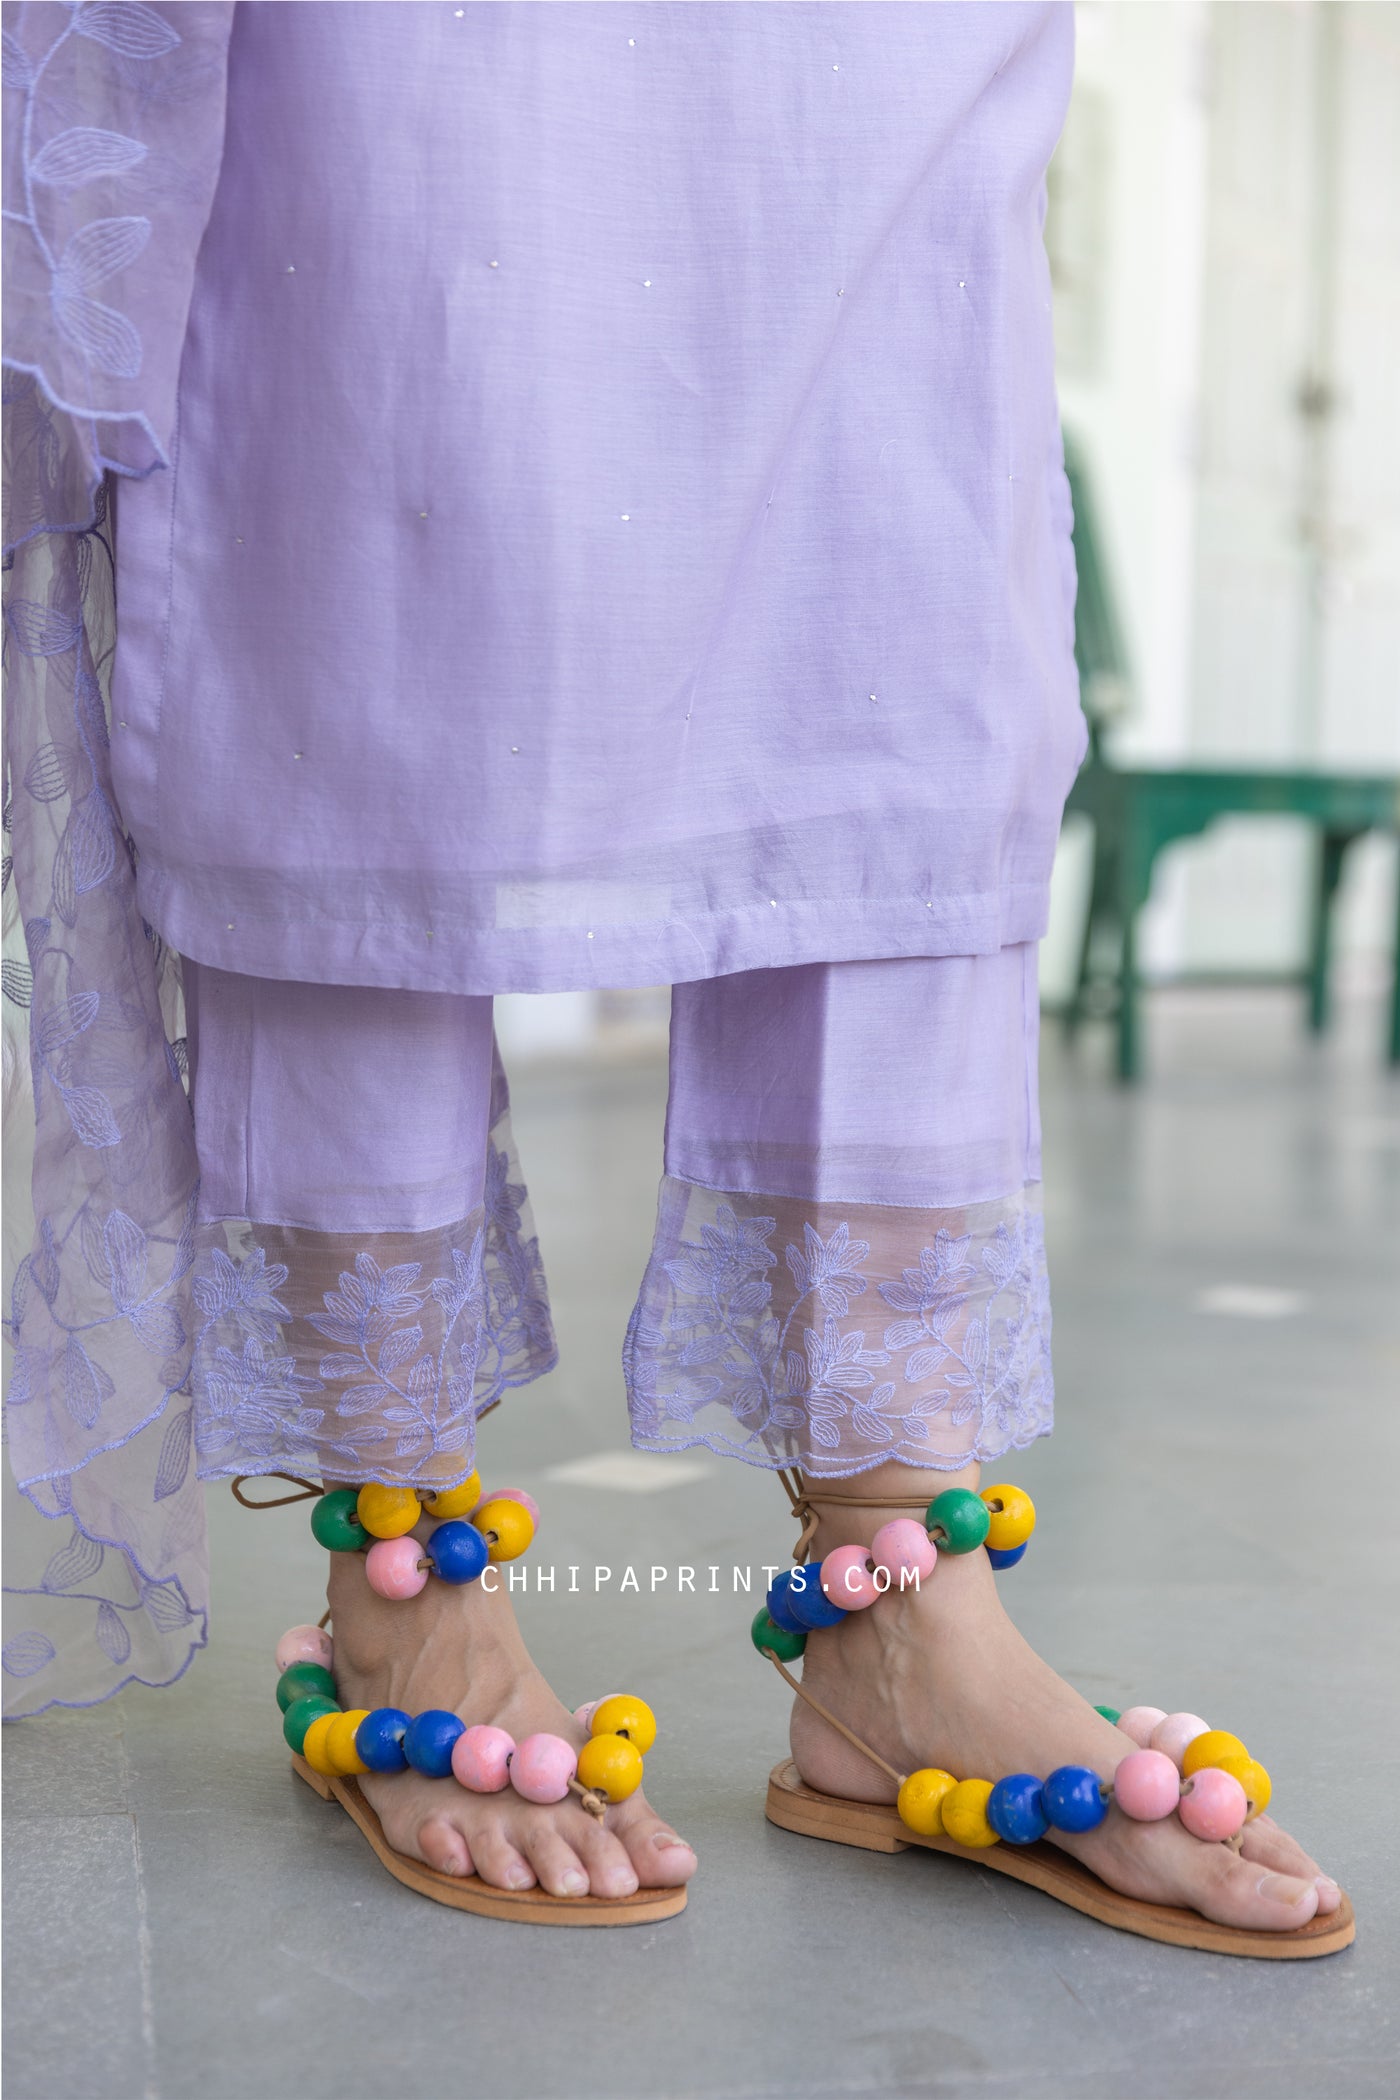 Chanderi Silk Mukaish Kurta Set with Organza Lace in Lavender